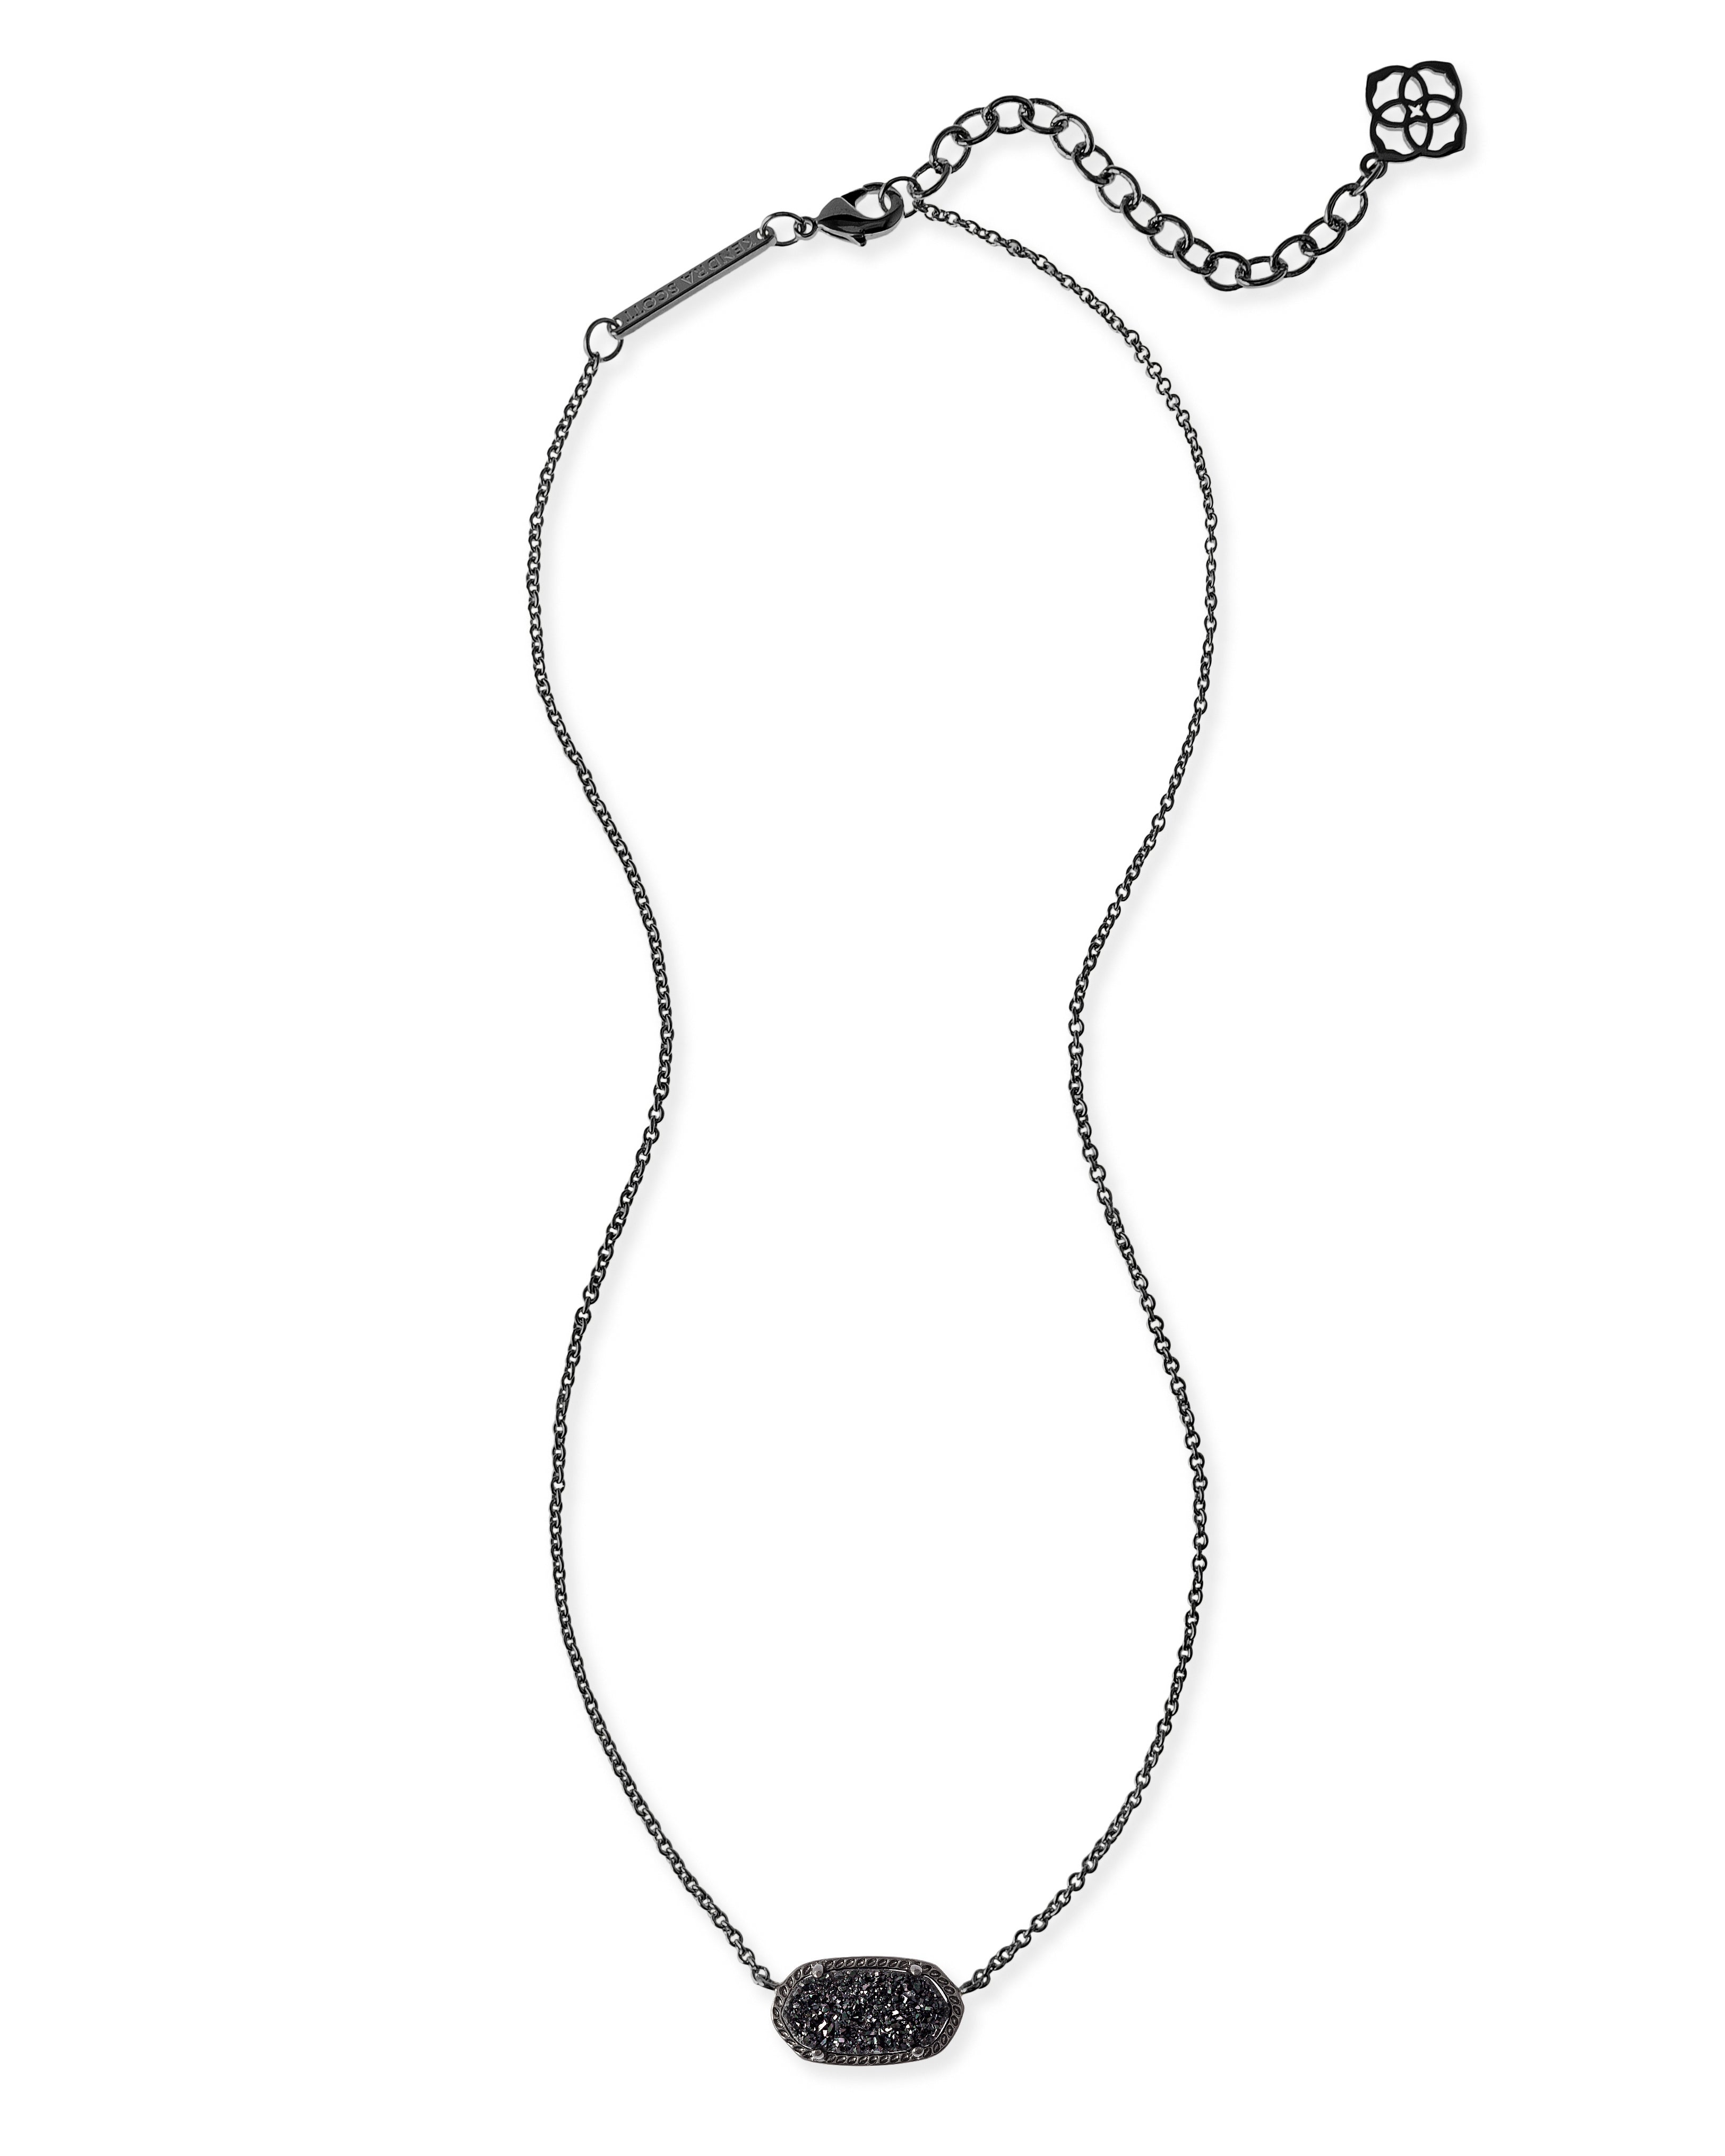 Kendra Scott Elisa Oval Pendant Necklace in Black Drusy and Gunmetal